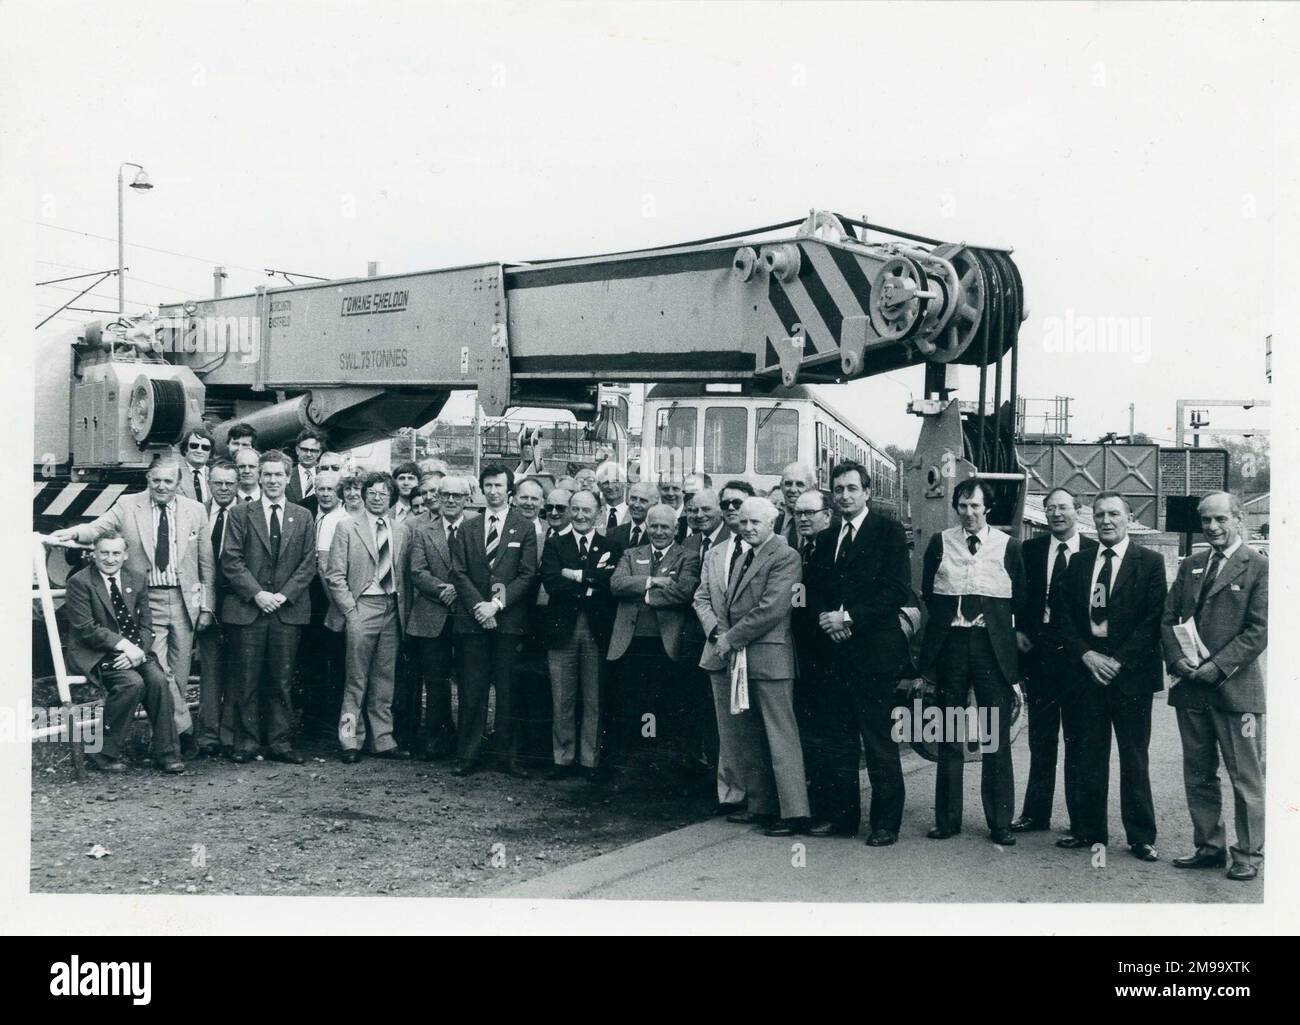 Group portrait of Railway Division members at British Rail Kingmore Depot, Carlisle. Cowans Sheldon 75 tons railway breakdown crane in the background. Stock Photo